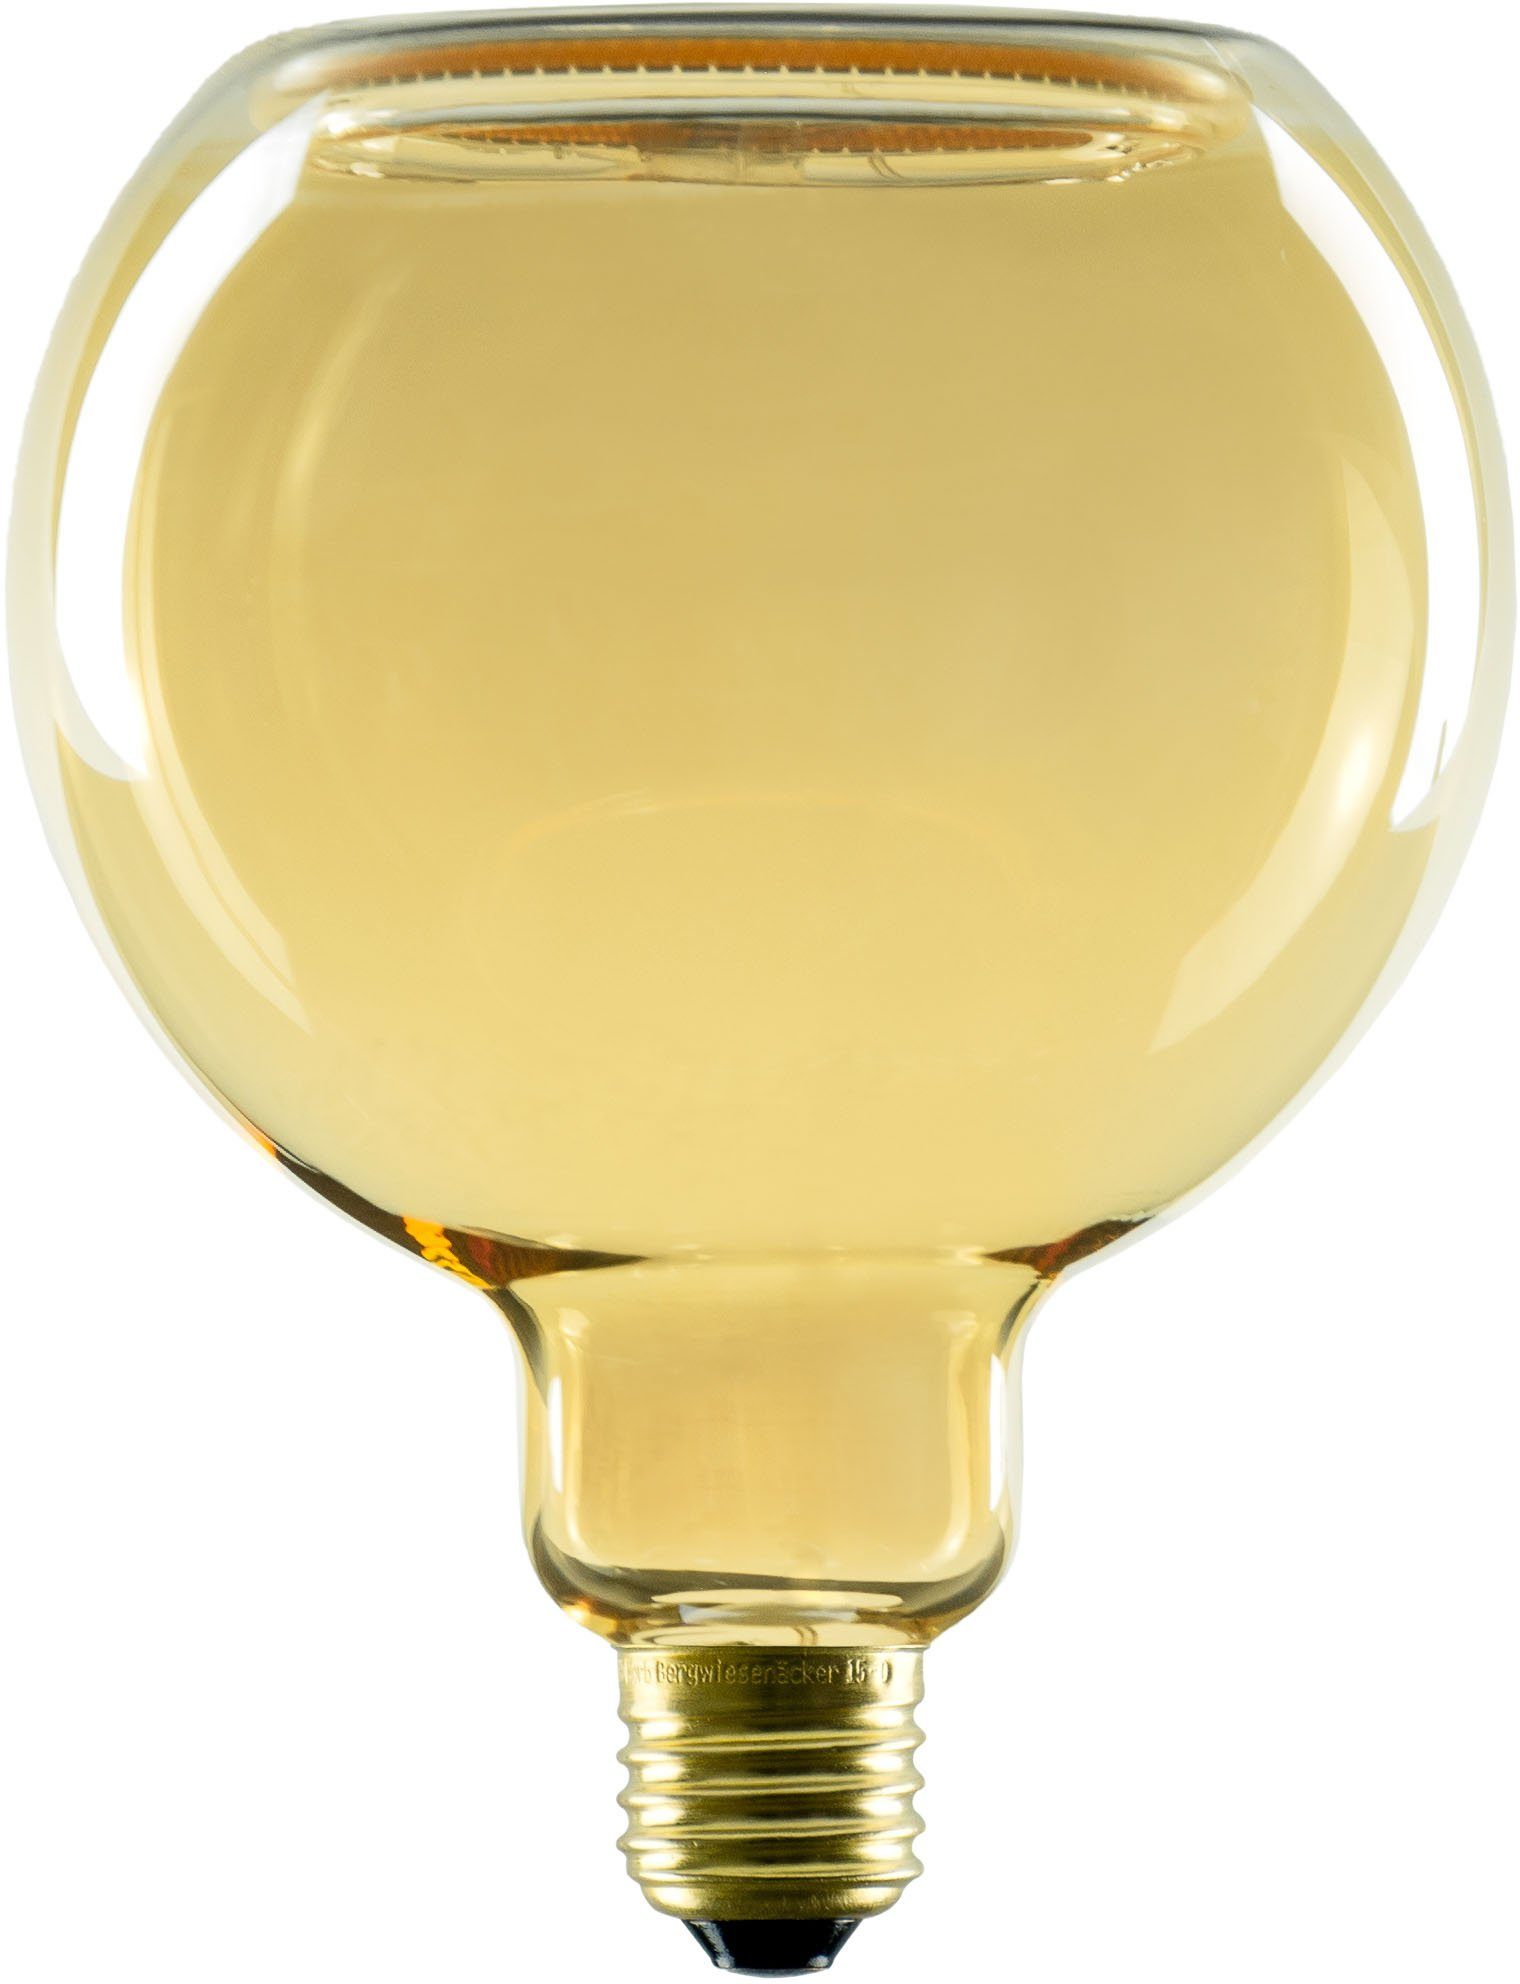 SEGULA LED-Leuchtmittel LED Floating Globe 125 gold, E27, Warmweiß, dimmbar, E27, Floating Globe 125 gold